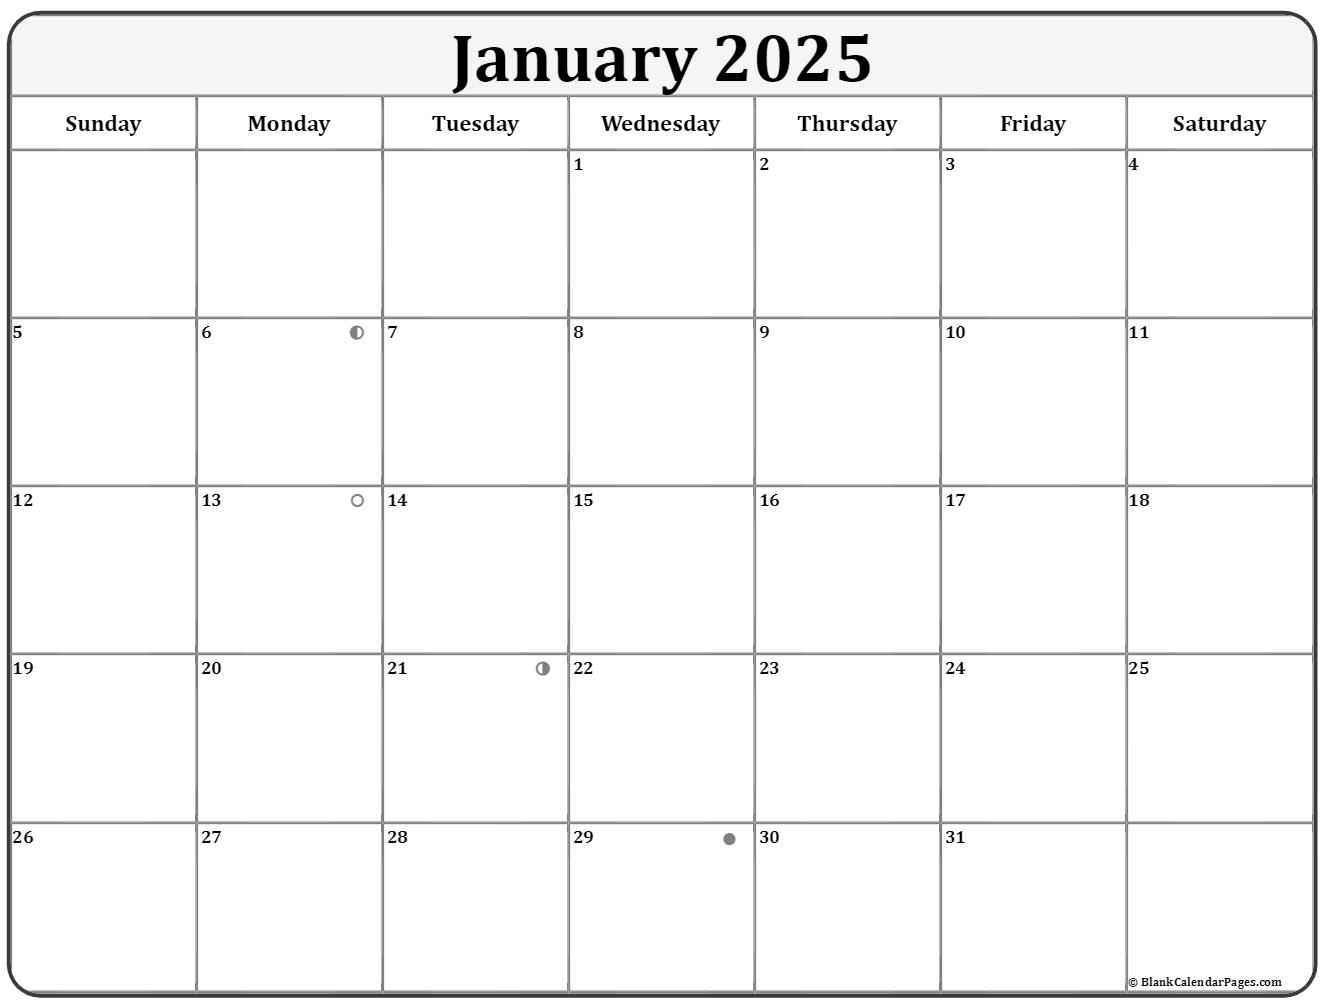 february-2025-calendar-with-extra-large-dates-wikidates